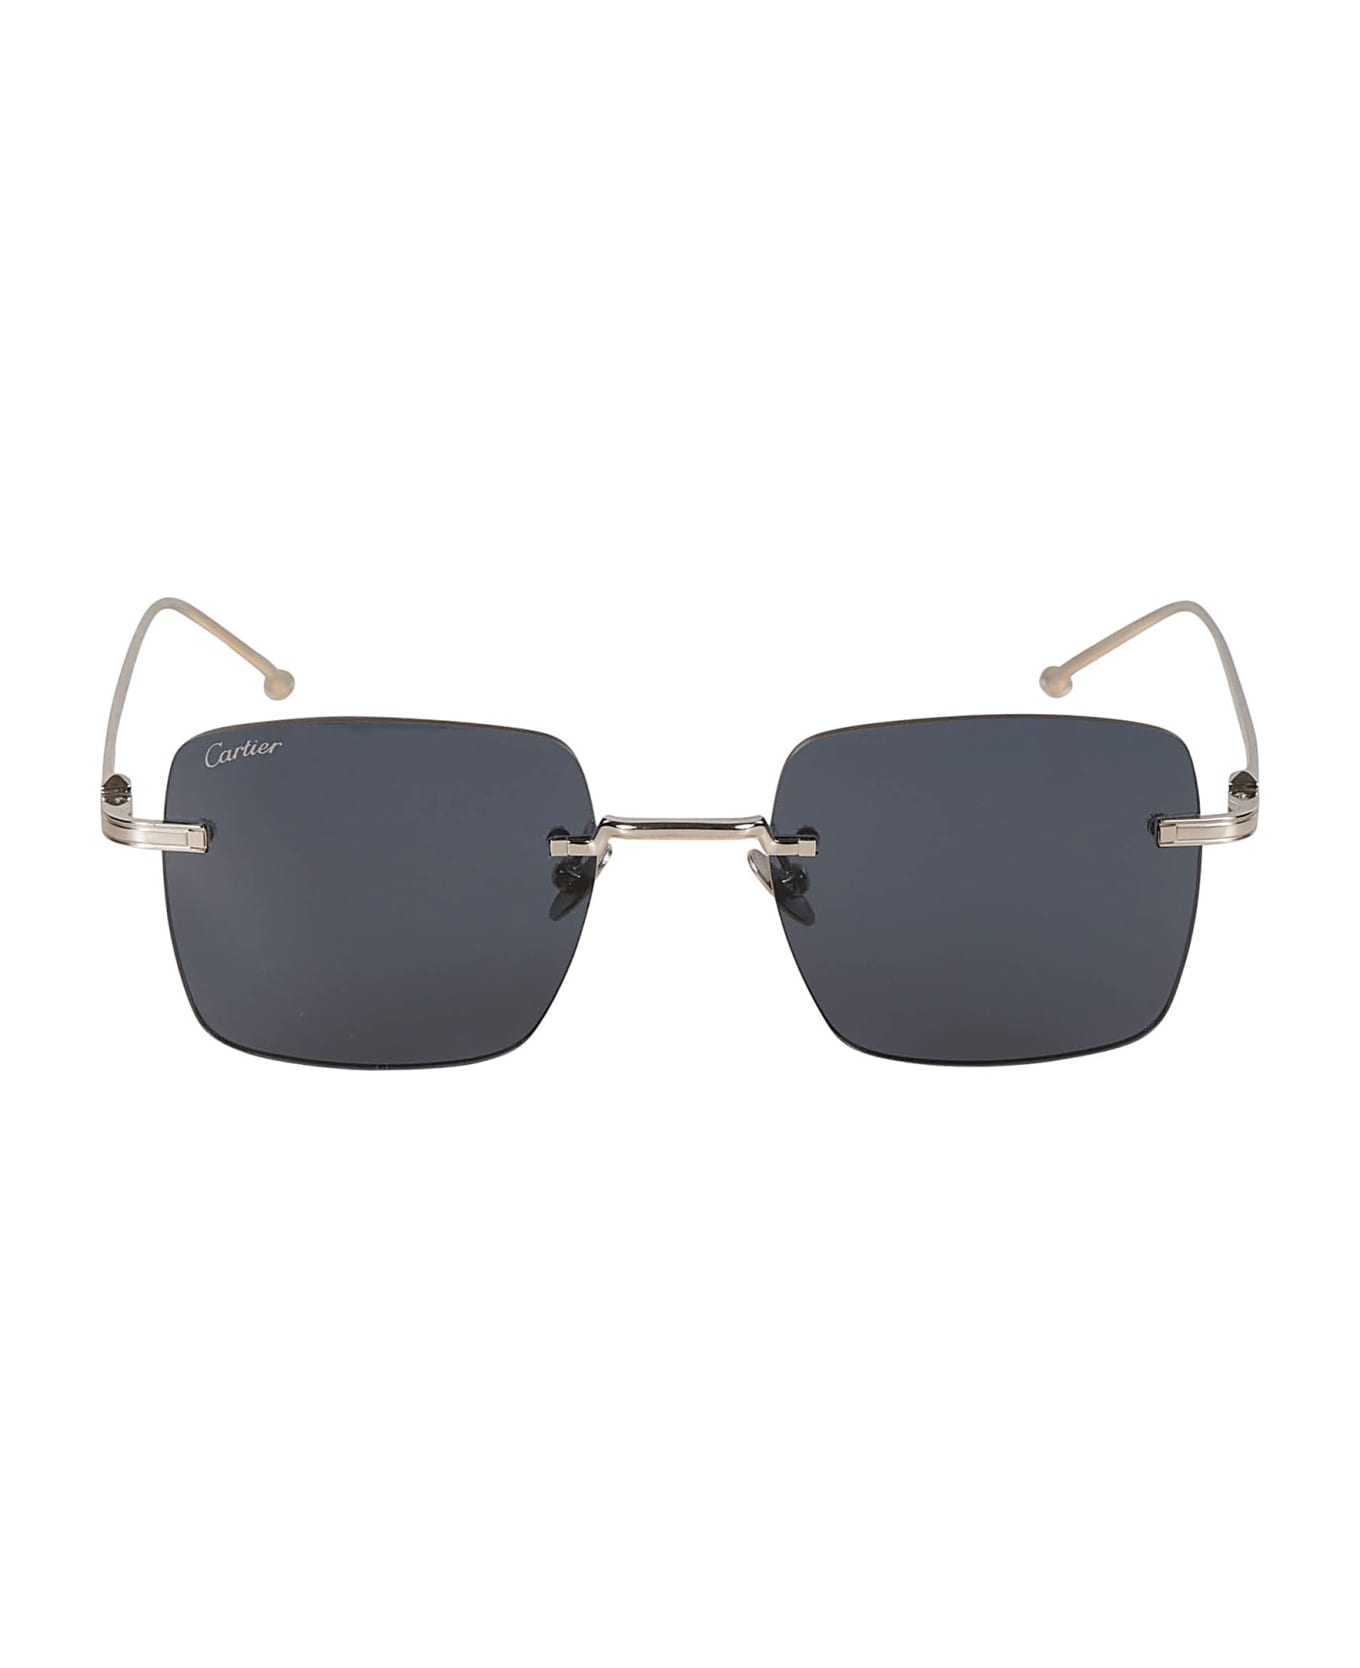 Cartier Eyewear Square Frame Glasses - Silver/Black